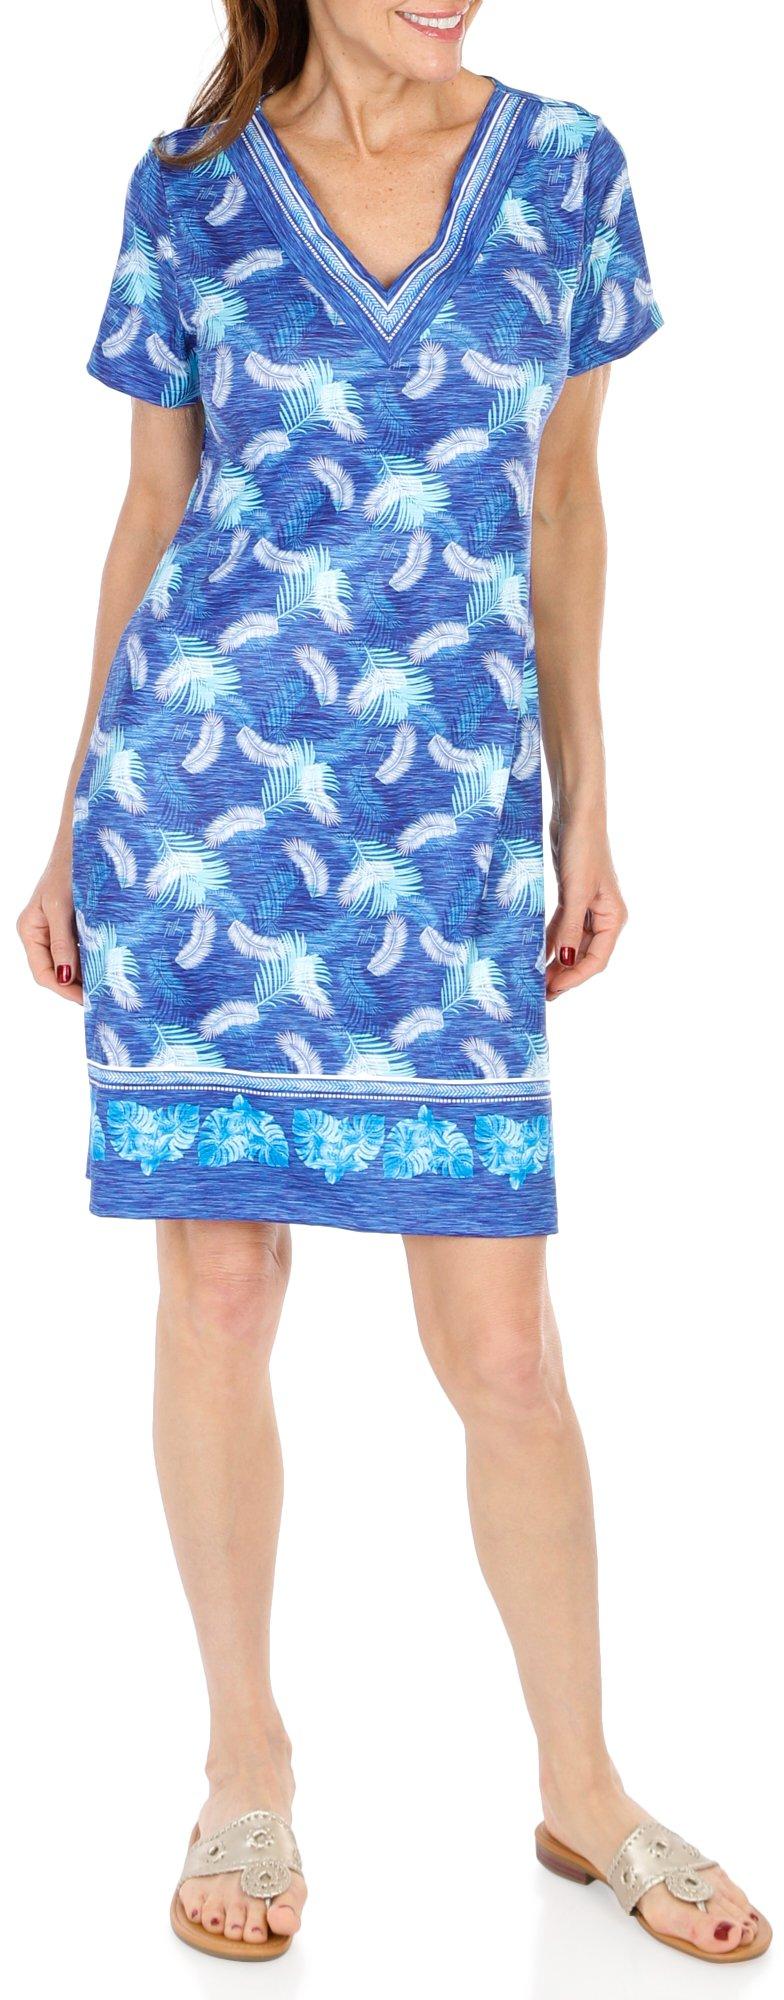 Women's Outdoor Palm Leaf Print Dress